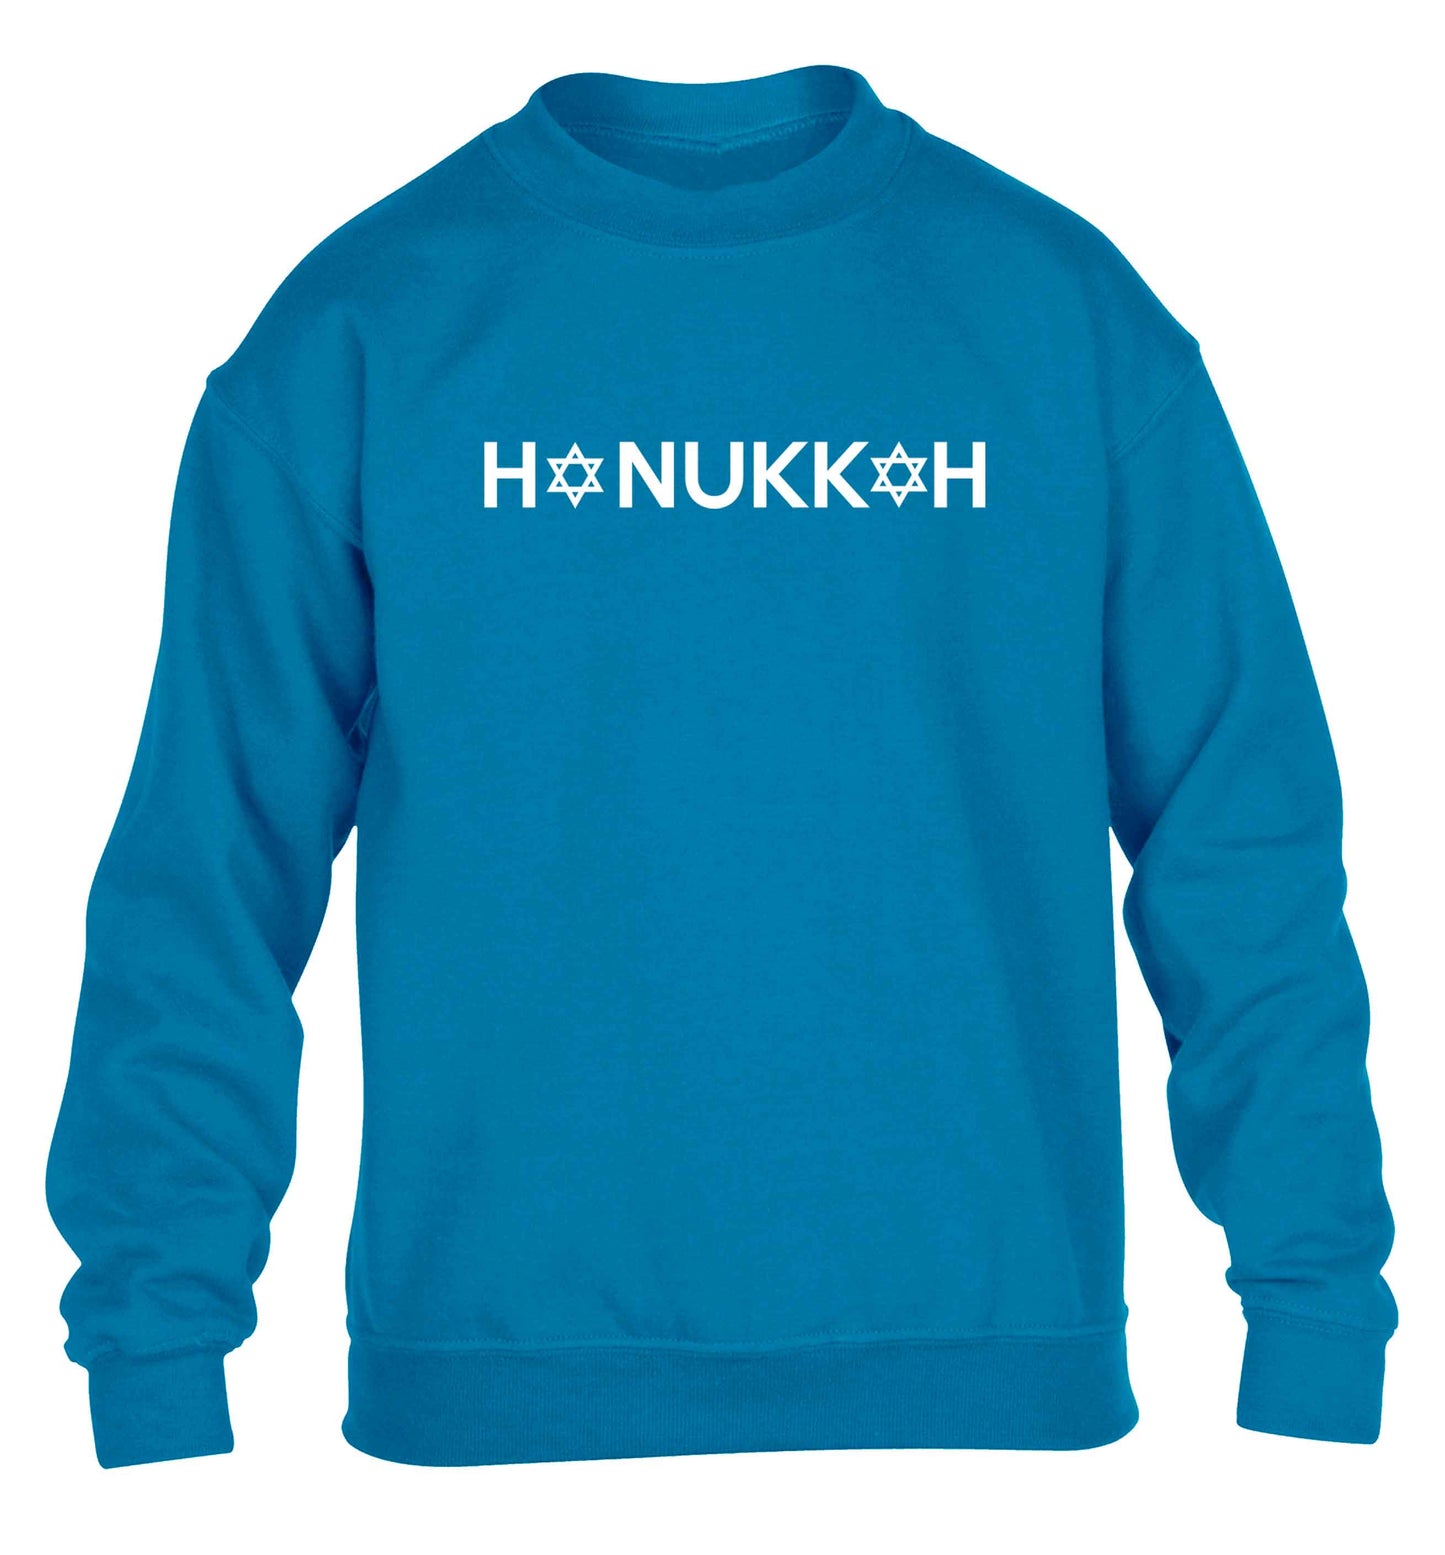 Hanukkah star of david children's blue sweater 12-13 Years